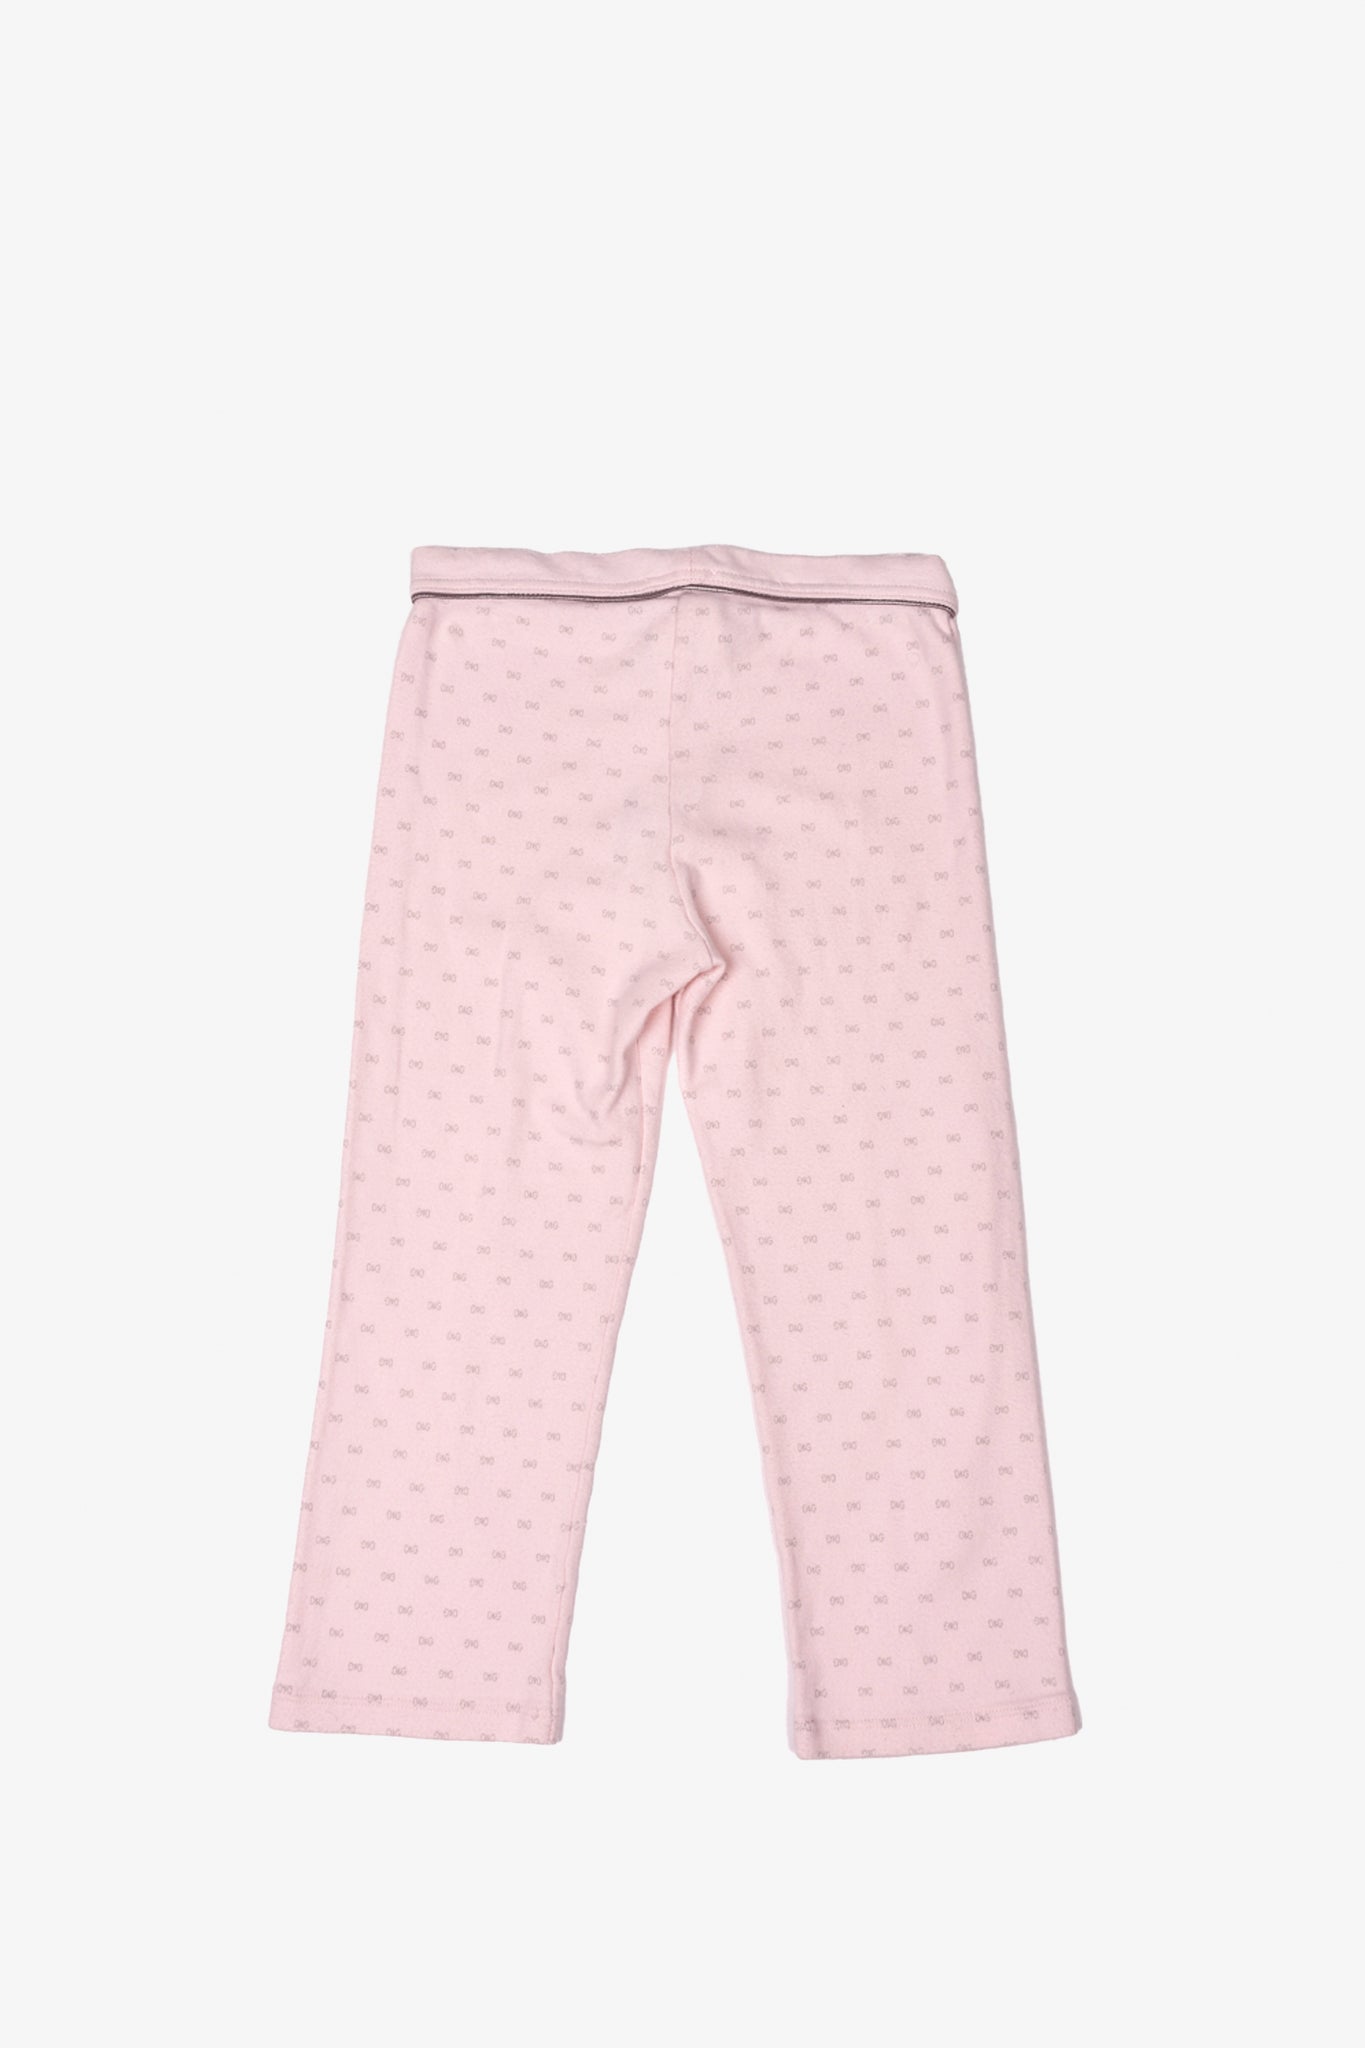 Pink Polka Dot Leggings